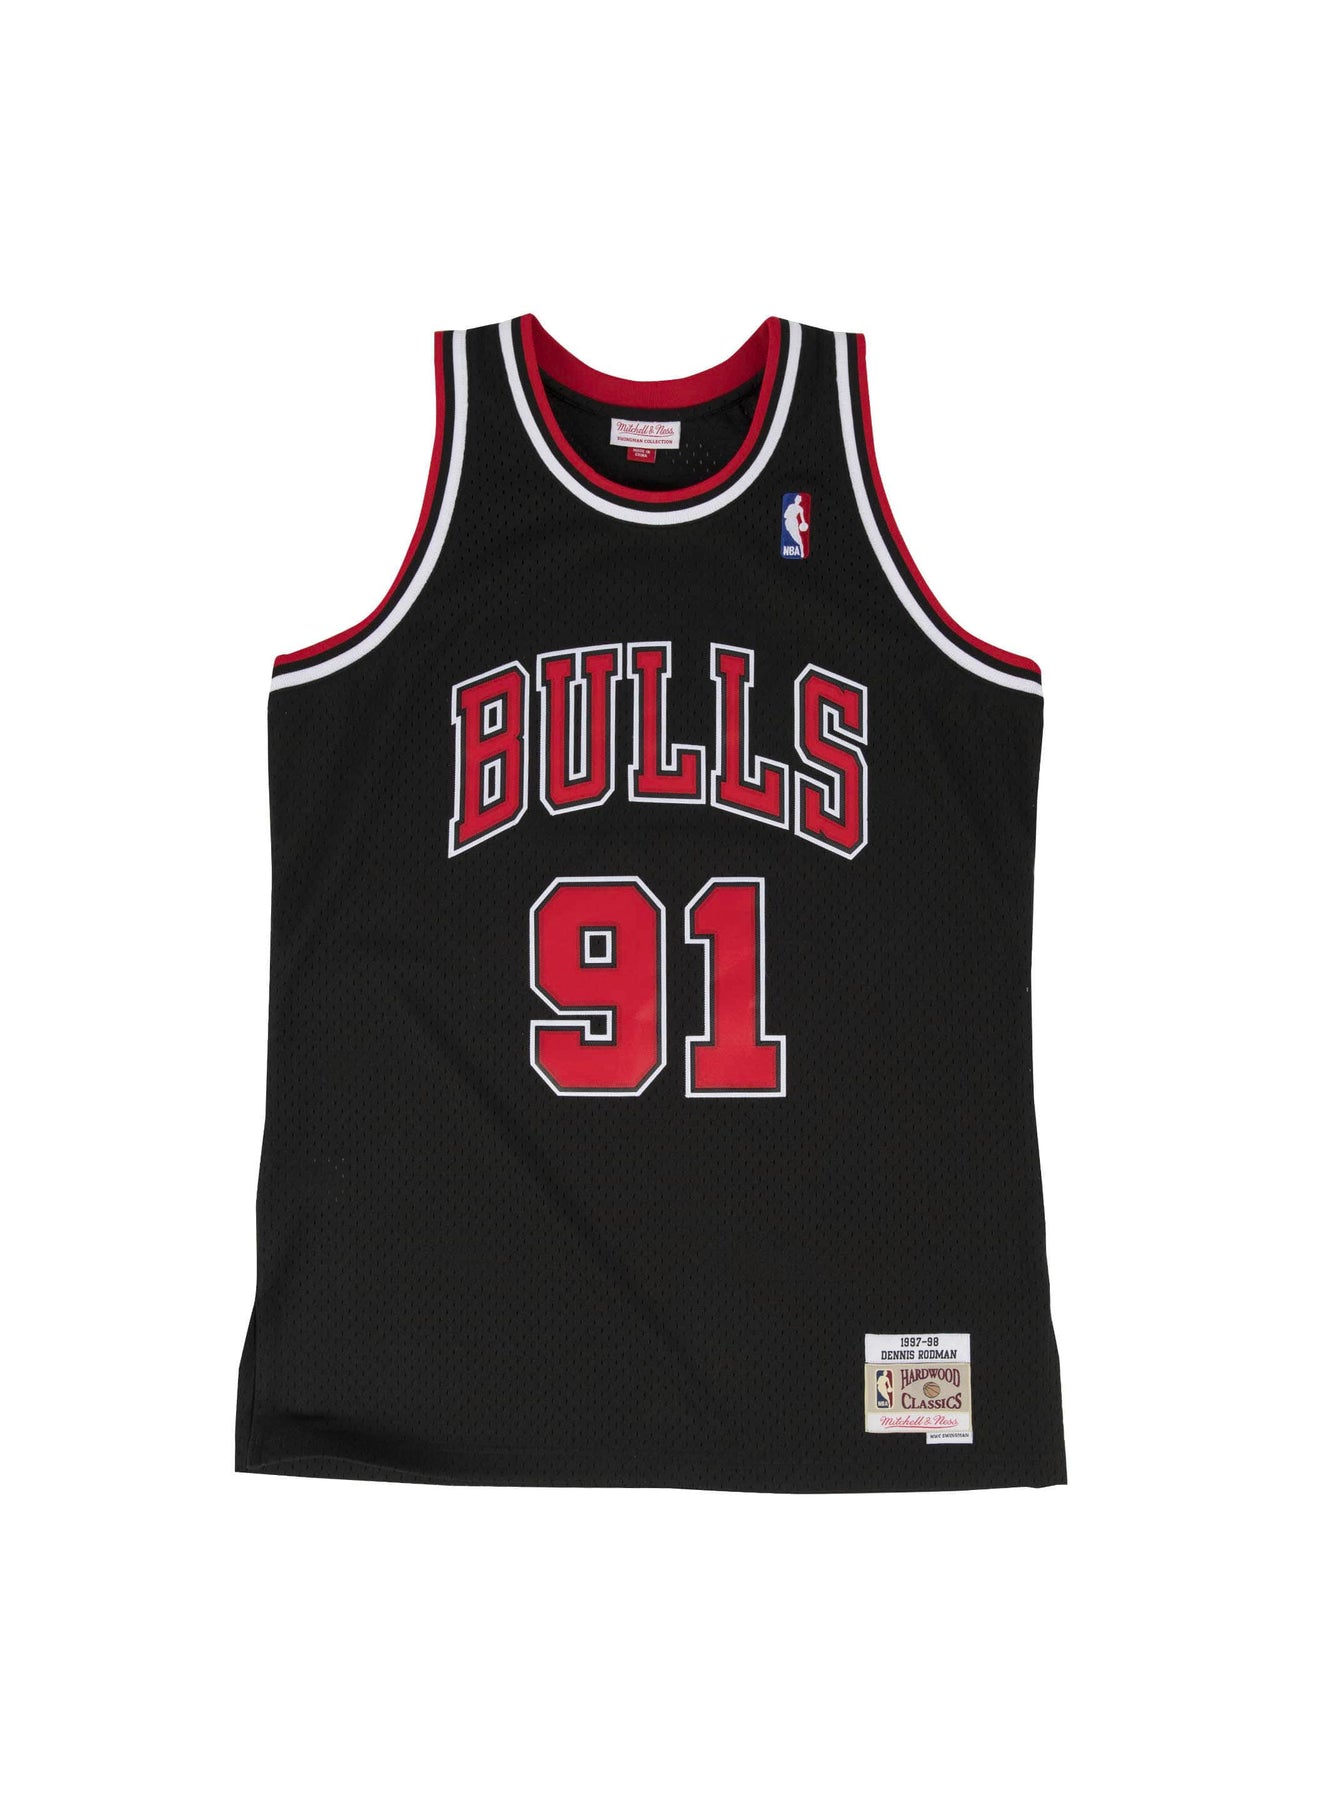 NBA Player Dennis Rodman Chicago Bulls retro shirt, hoodie